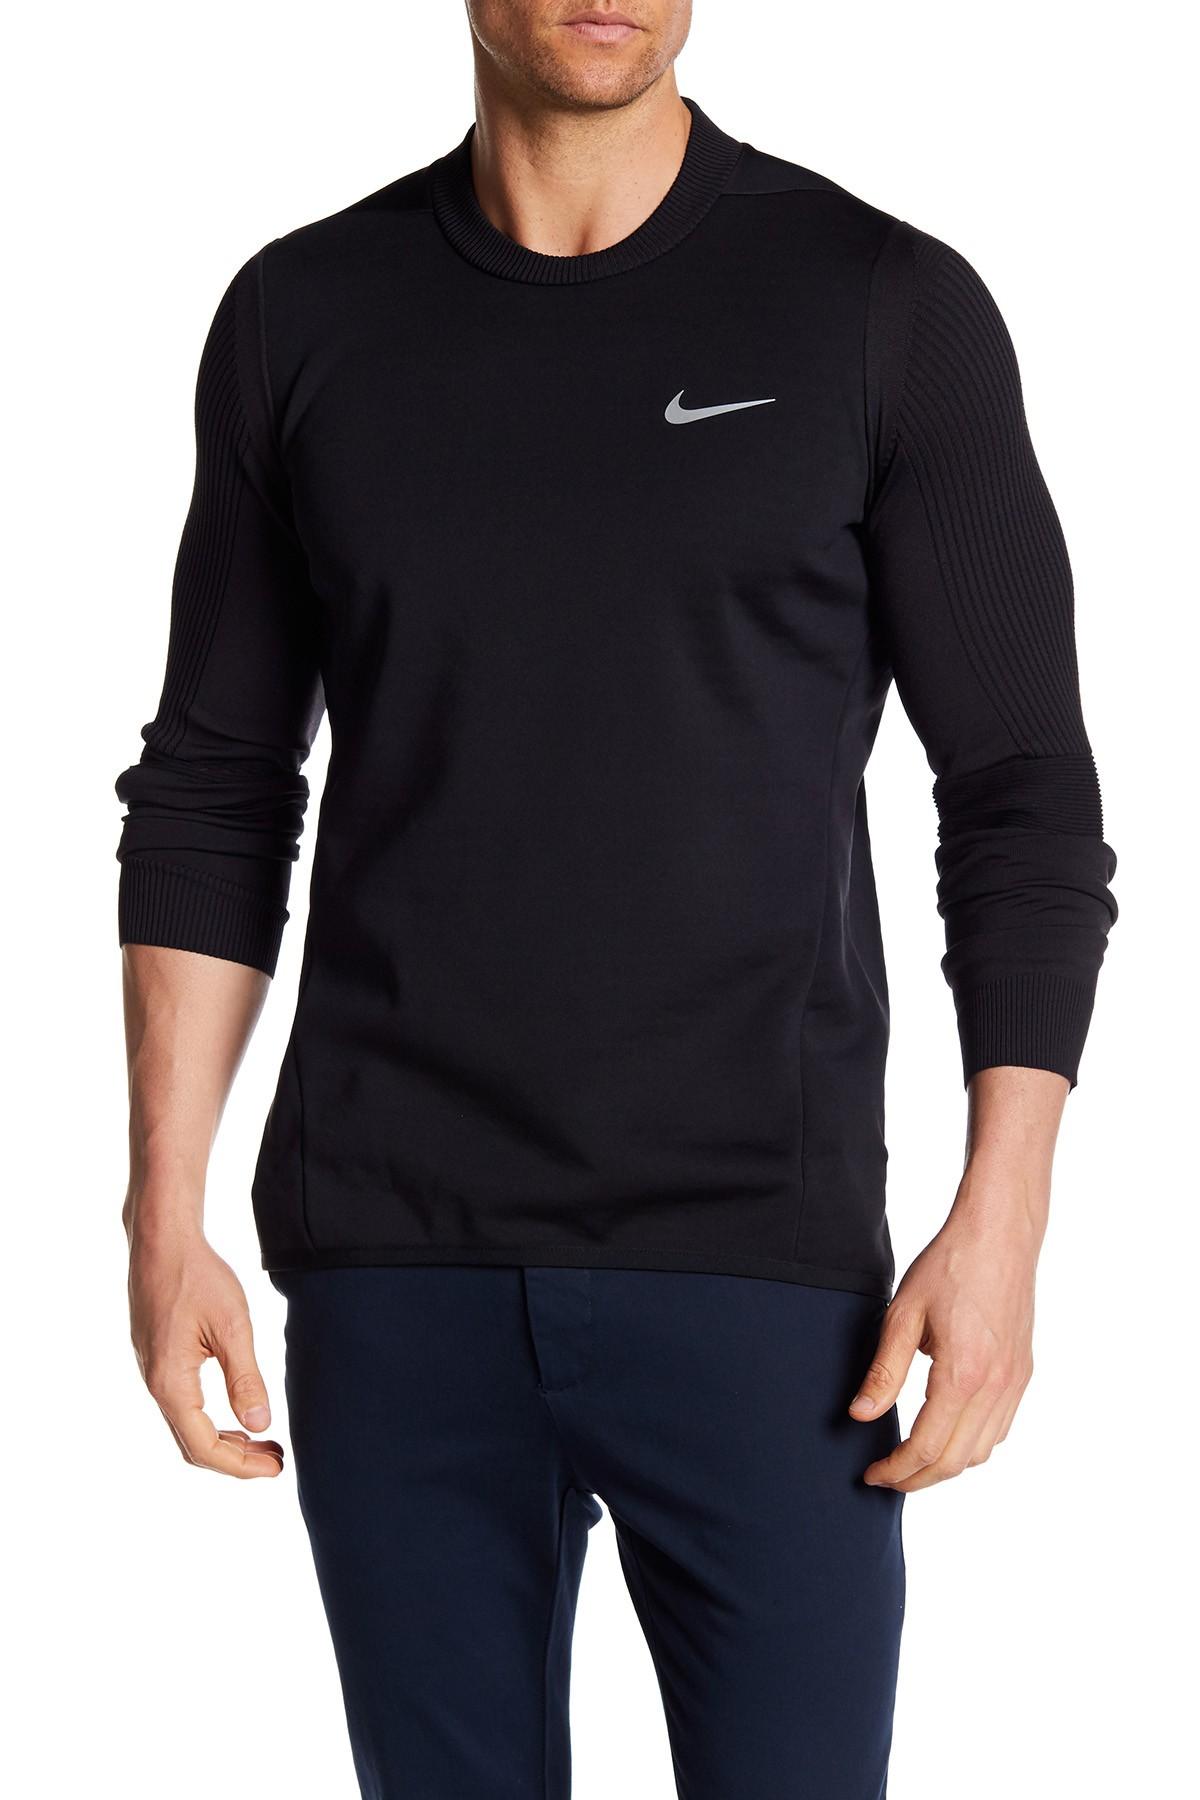 Lyst - Nike Tech Sphere Knit Crew Neck Sweater in Black for Men